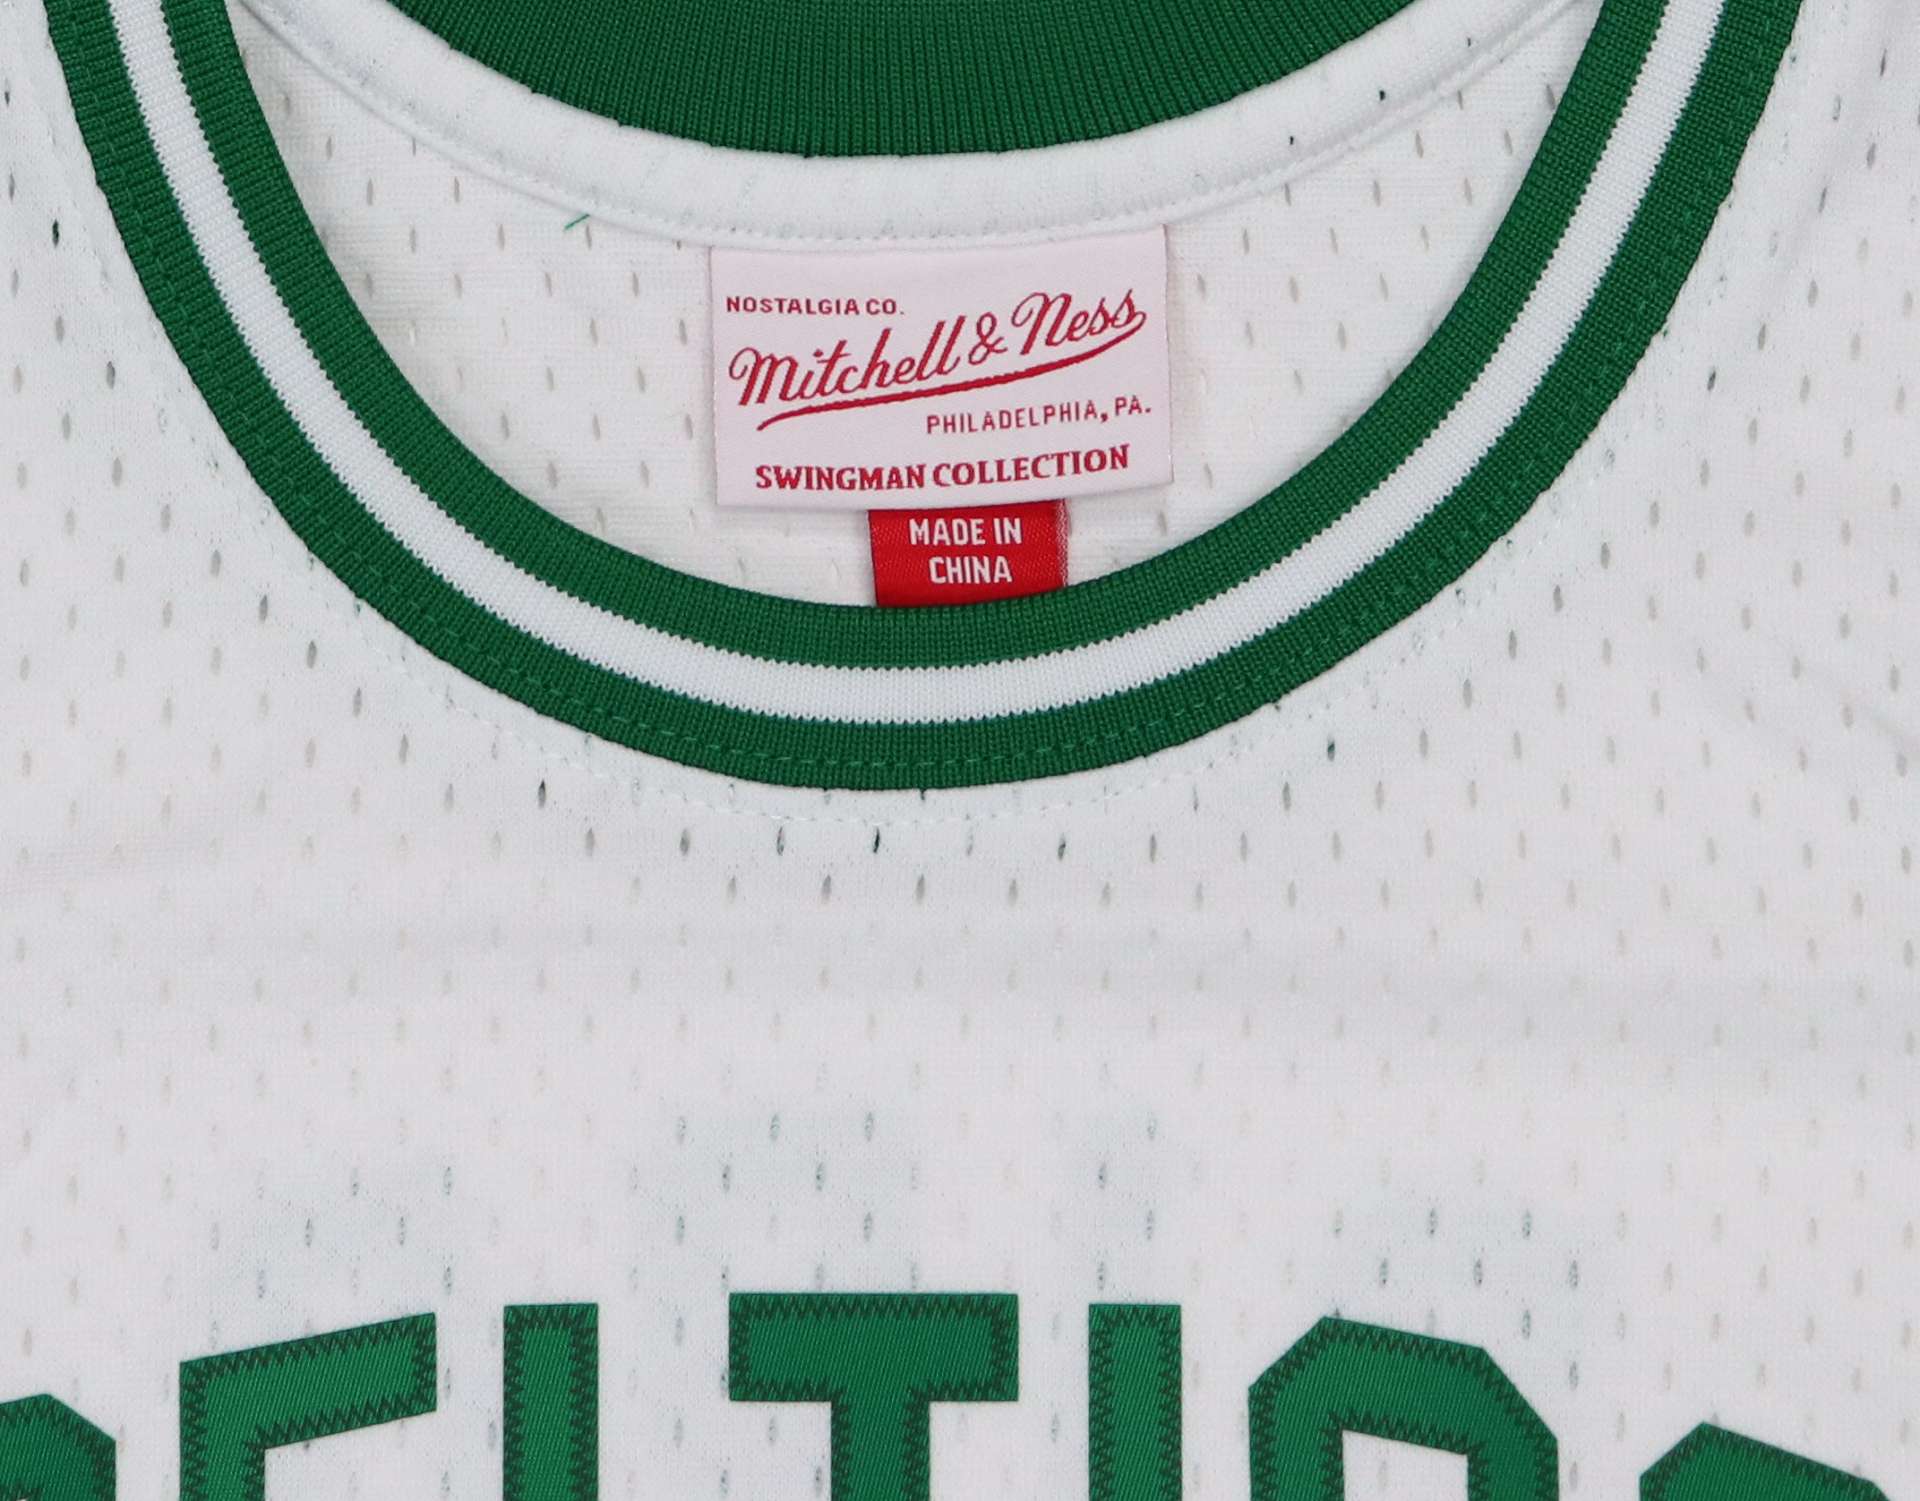 Larry Bird #33 Boston Celtics NBA Swingman Jersey Mitchell & Ness